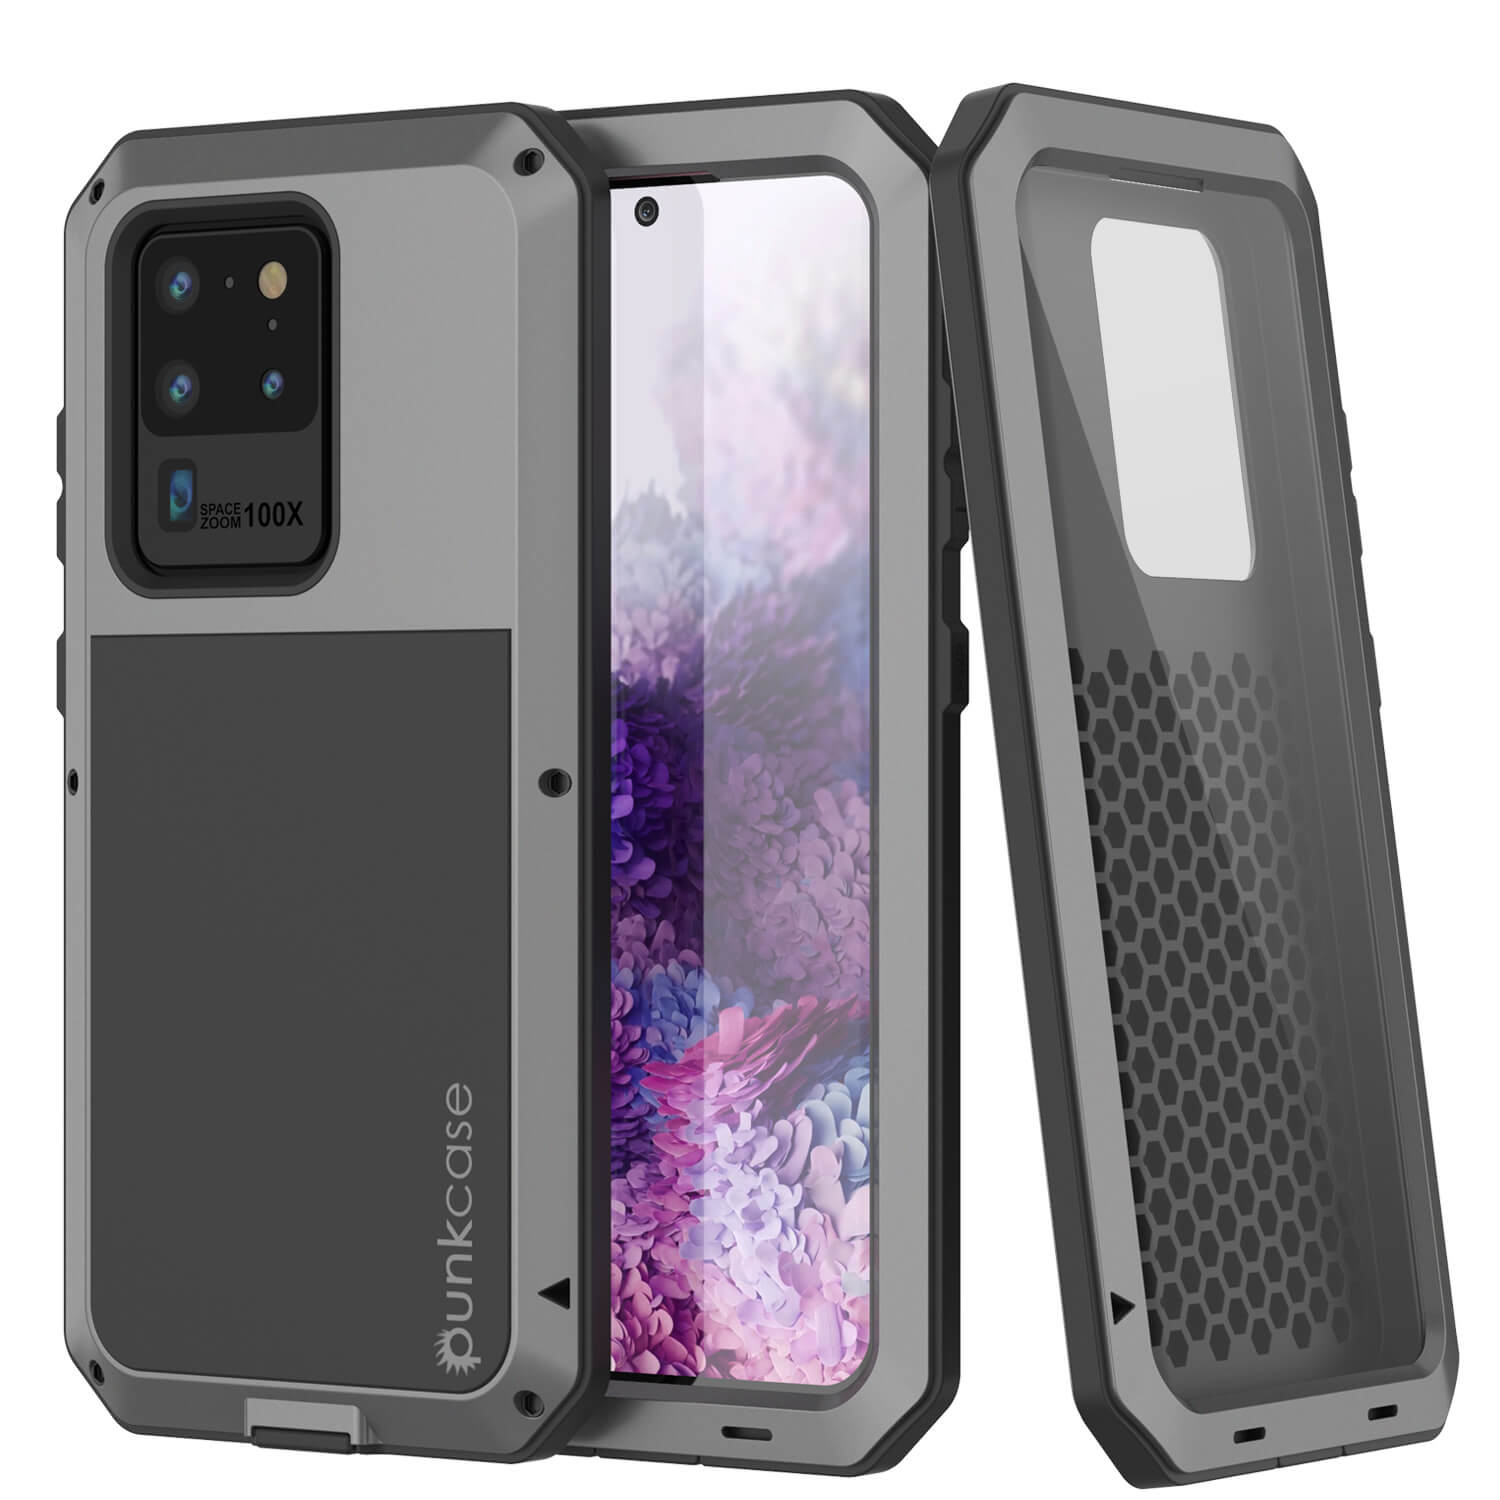 MXX Heavy Duty Case for Samsung Galaxy S20 Ultra - (No Screen Protector)  Drop Protection Tough Case for Galaxy S20 Ultra 5G (Black)